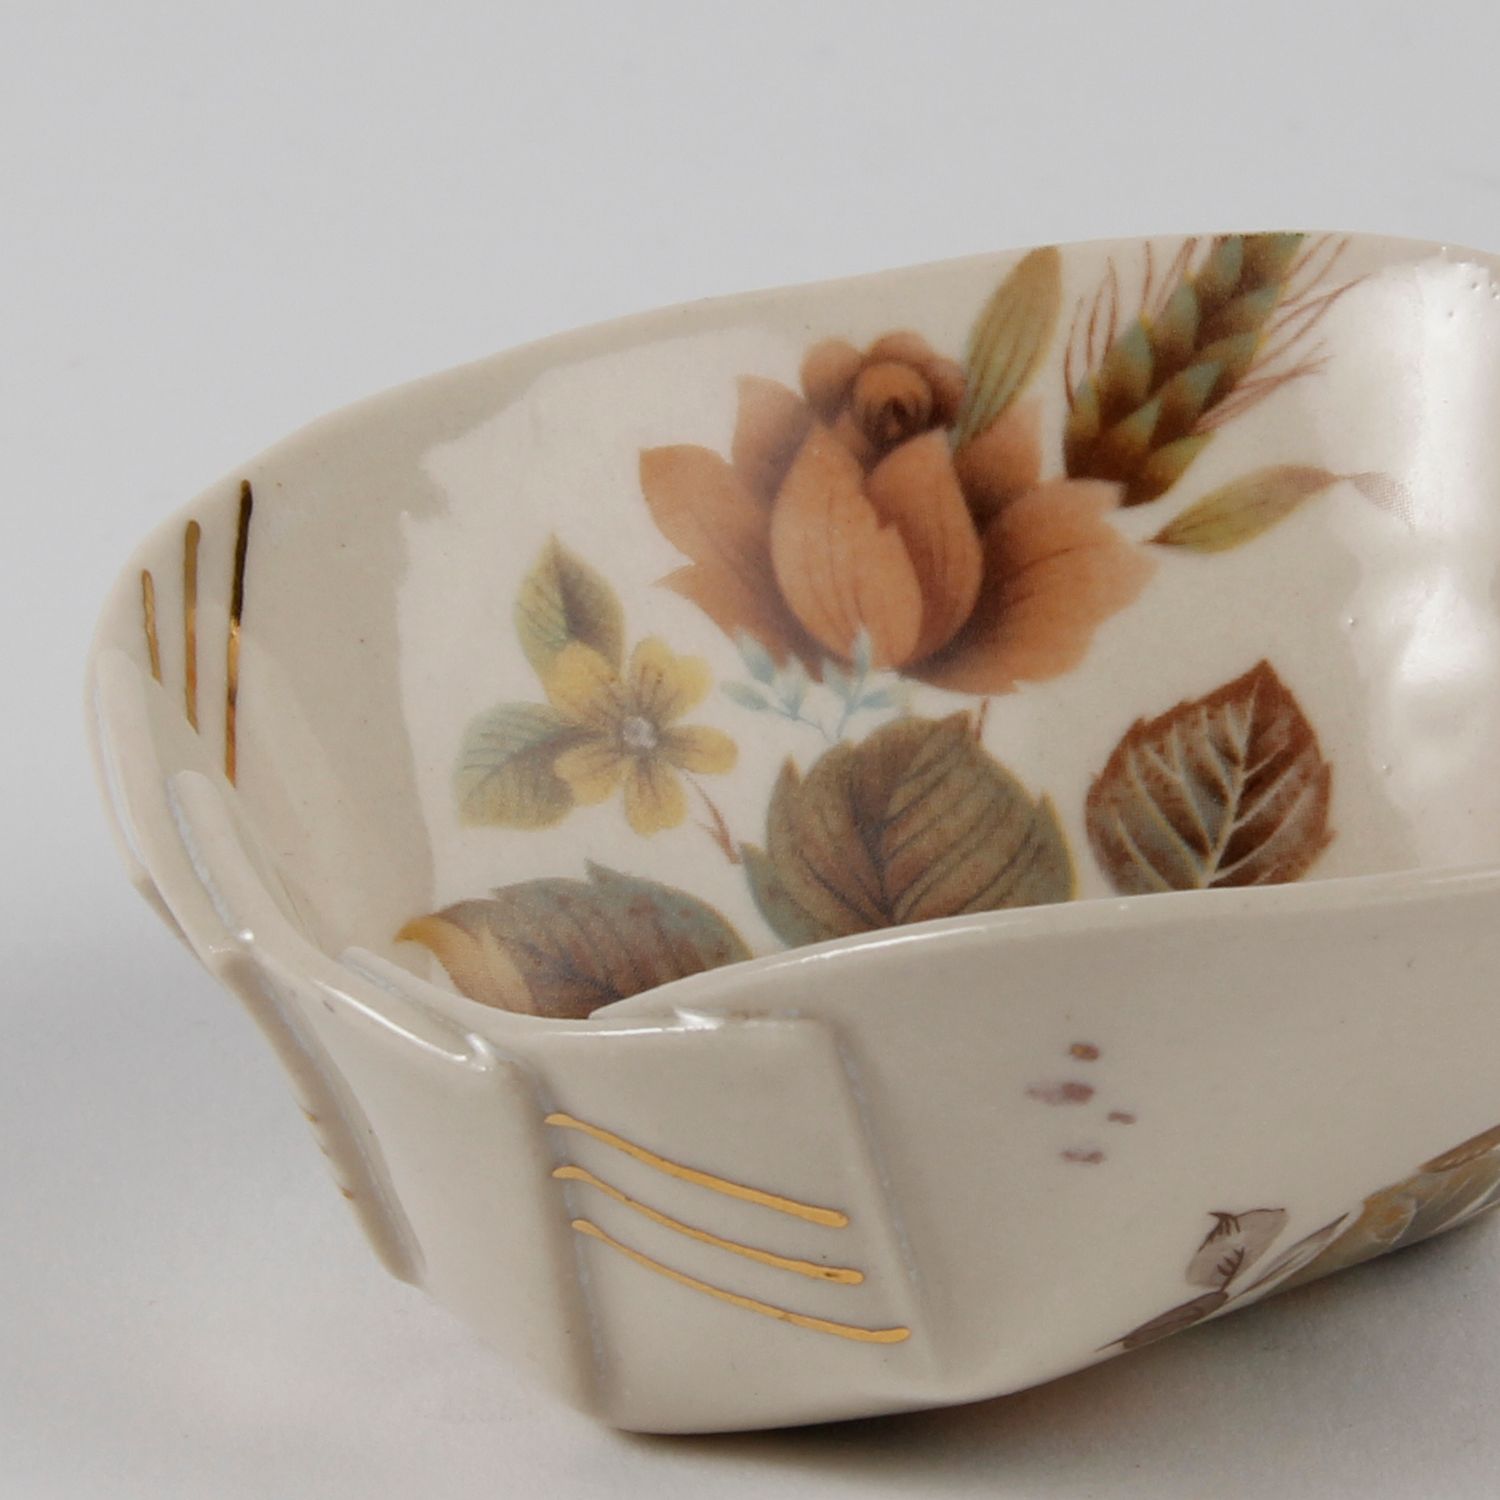 Natalie Waddell: Medium Floral Bowl Product Image 3 of 4